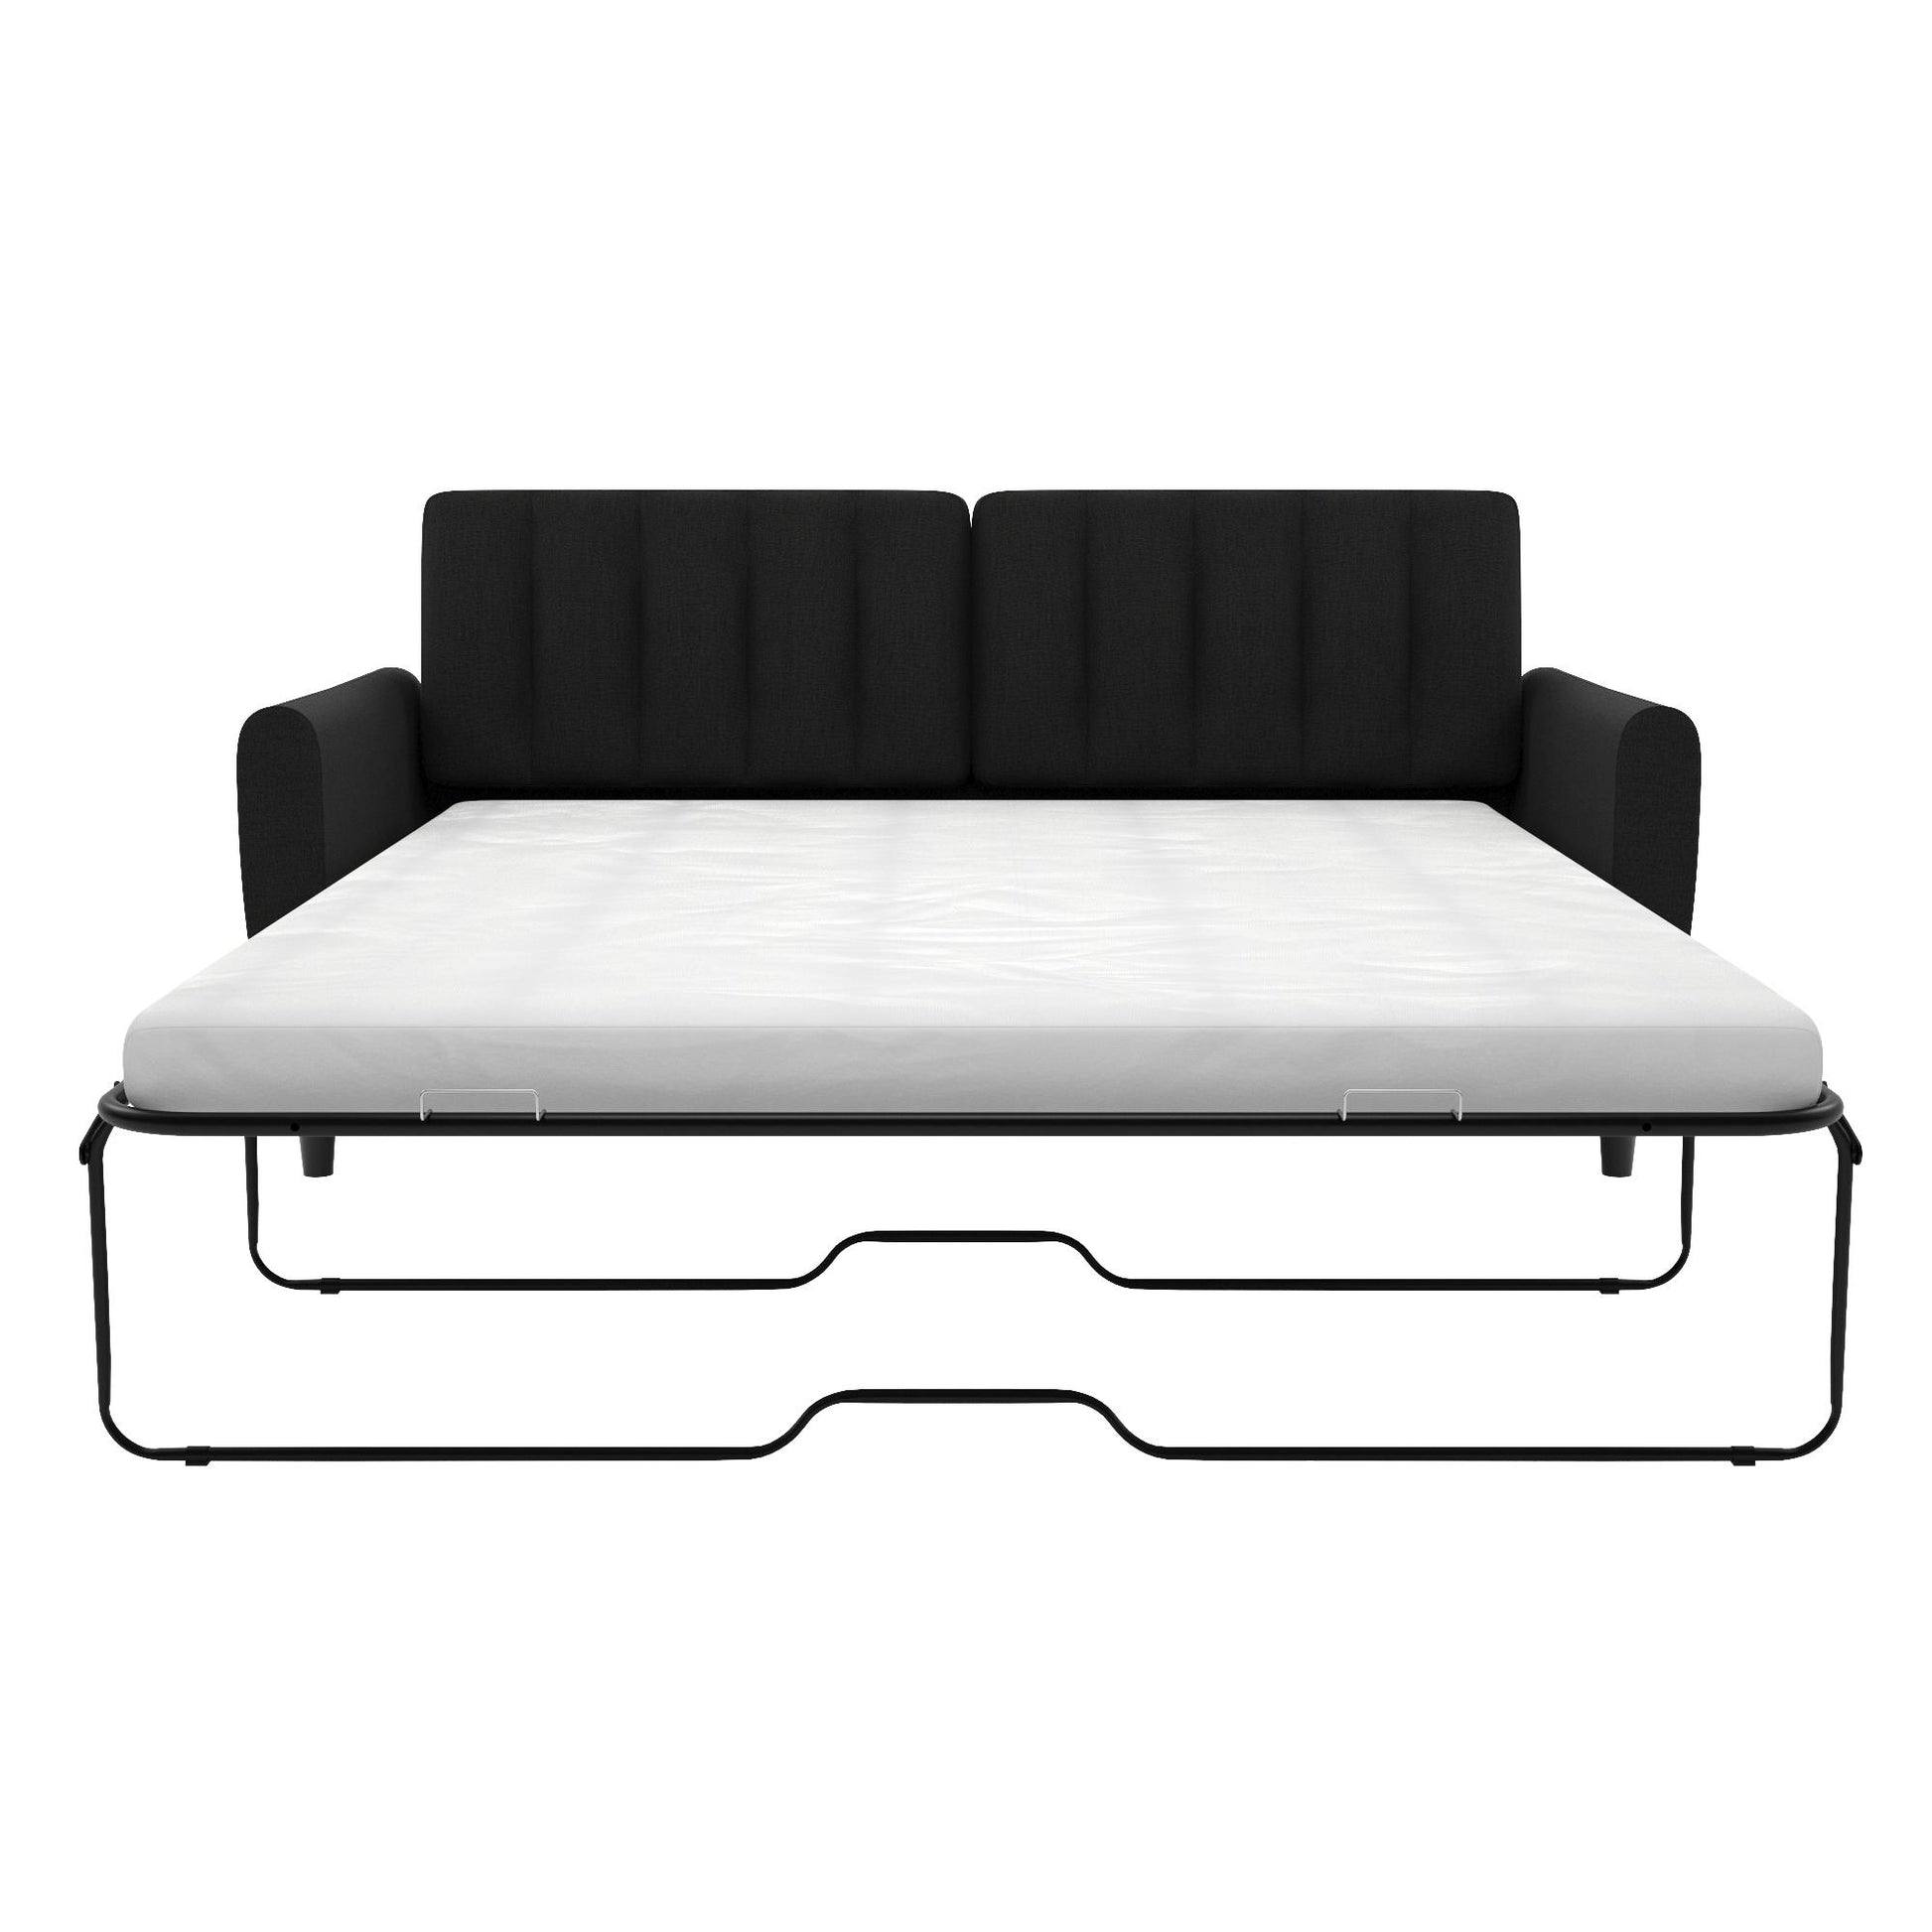 Novogratz Brittany Sleeper Sofa with Memory Foam Mattress, Queen, Dark Gray Linen - Dark Gray - Queen